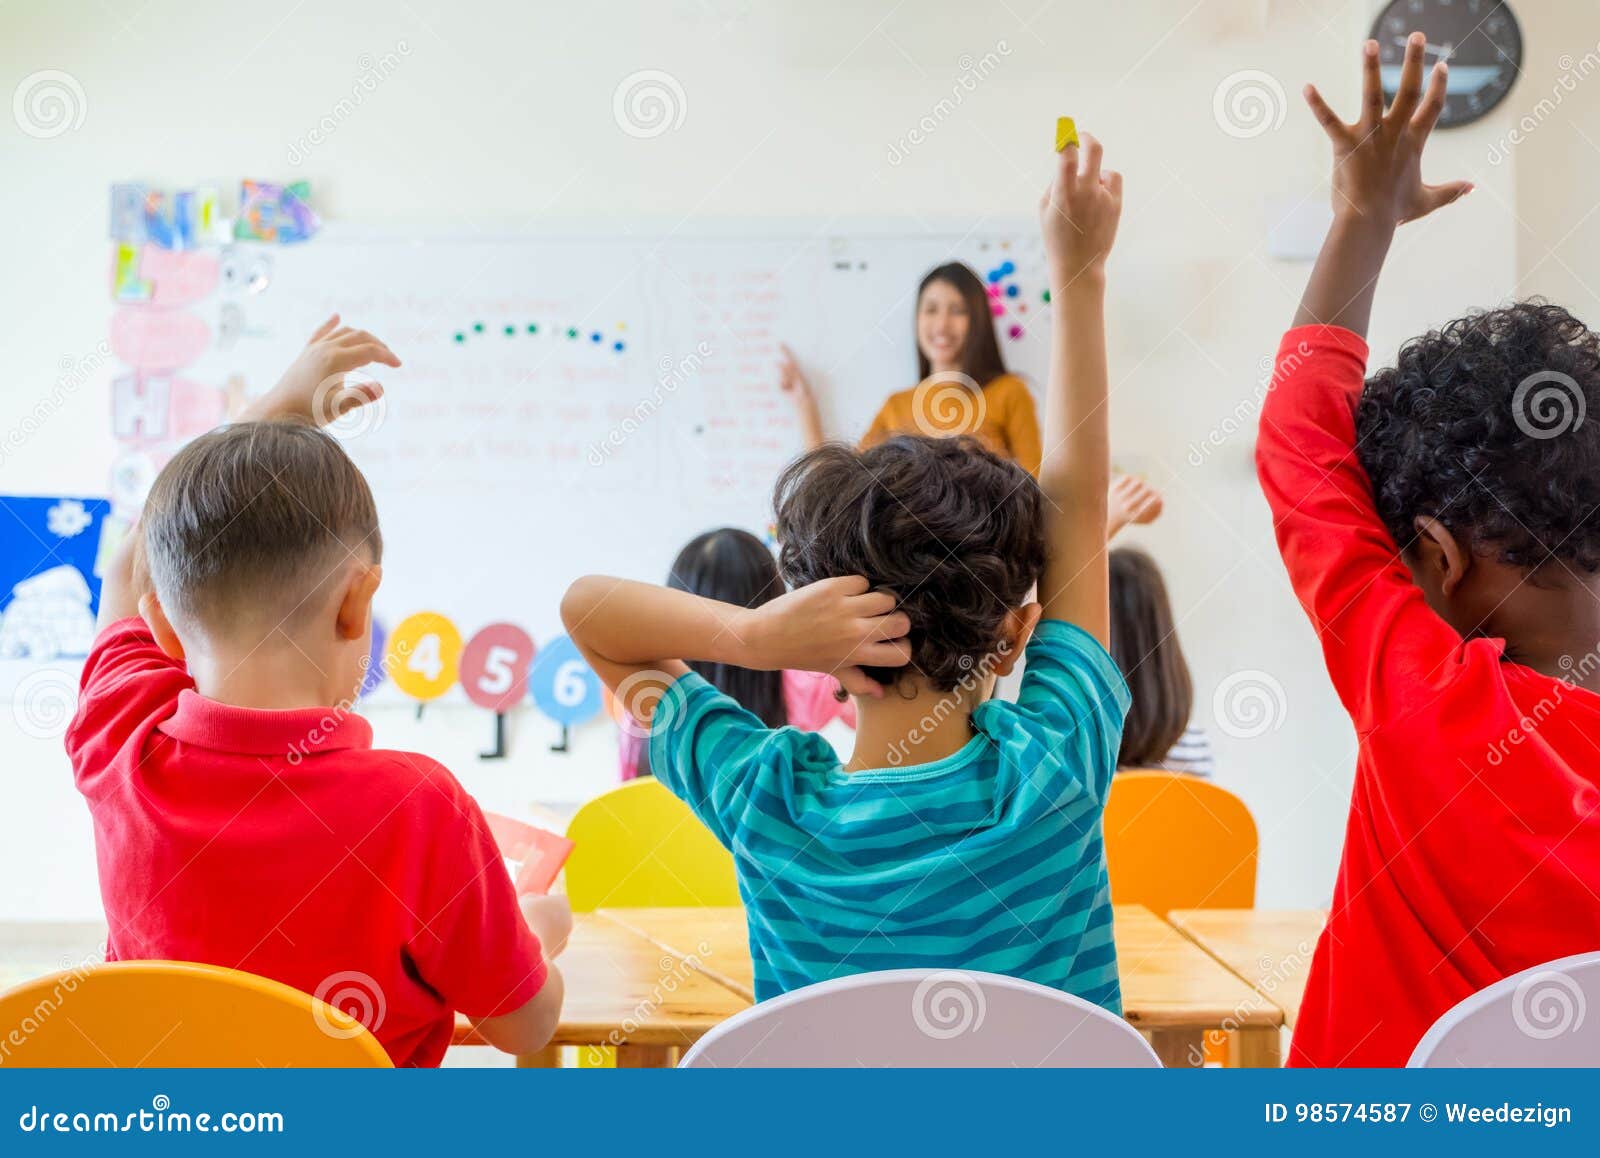 preschool kid raise arm up to answer teacher question on whiteboard in classroom,kindergarten education concept